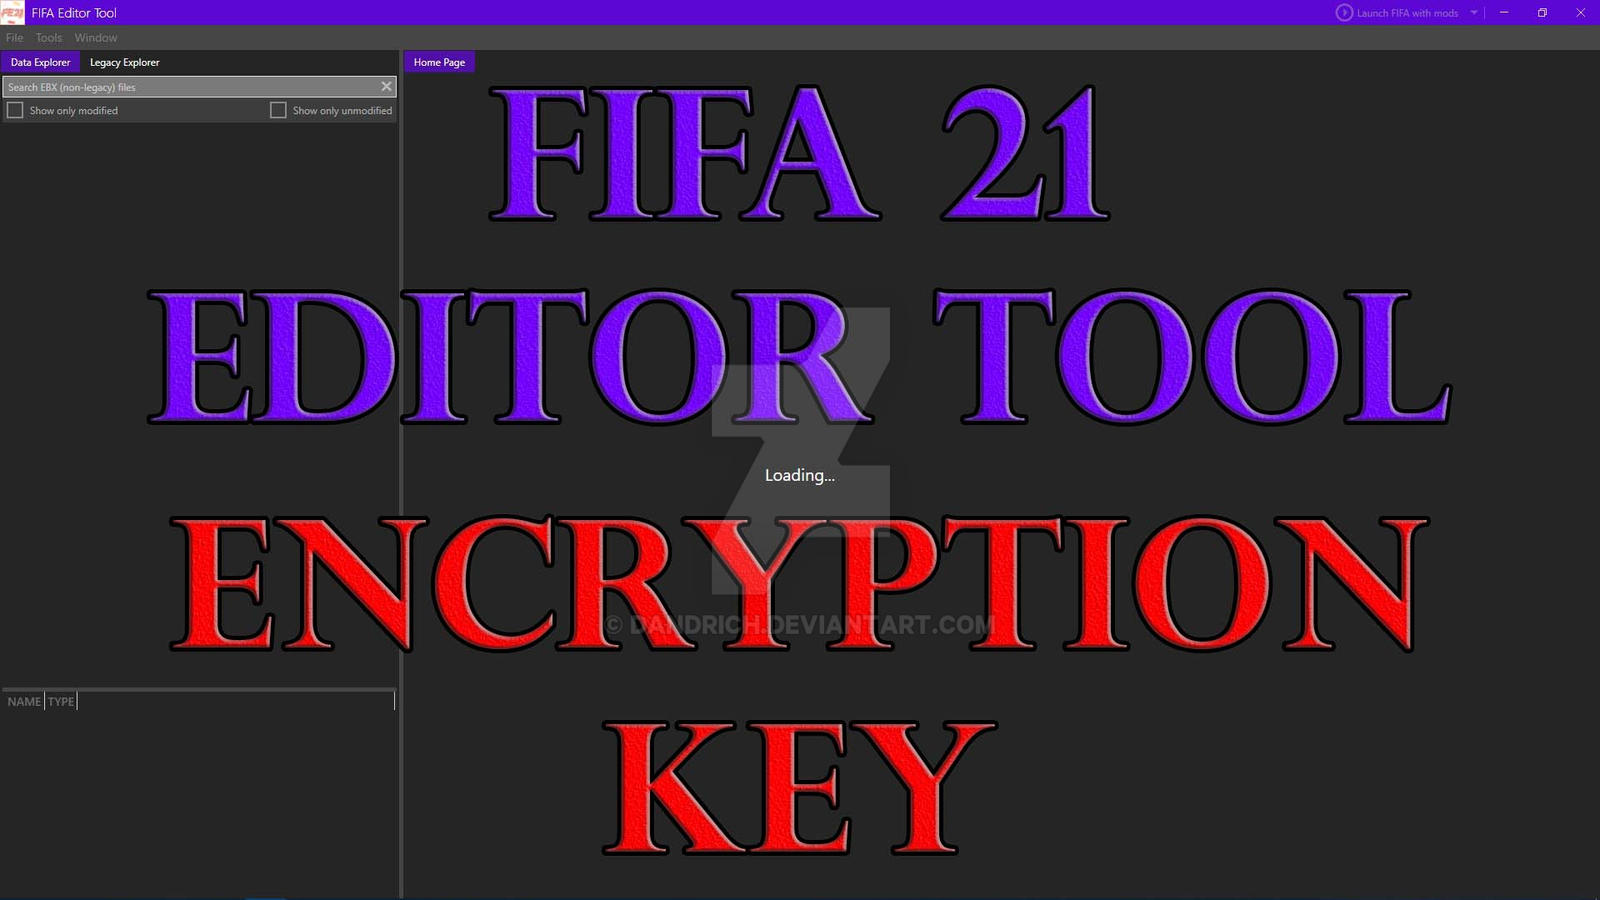 FIFA 21 (PC) TUTO Encryption Key FIFA Editor Tool by Dandrich on